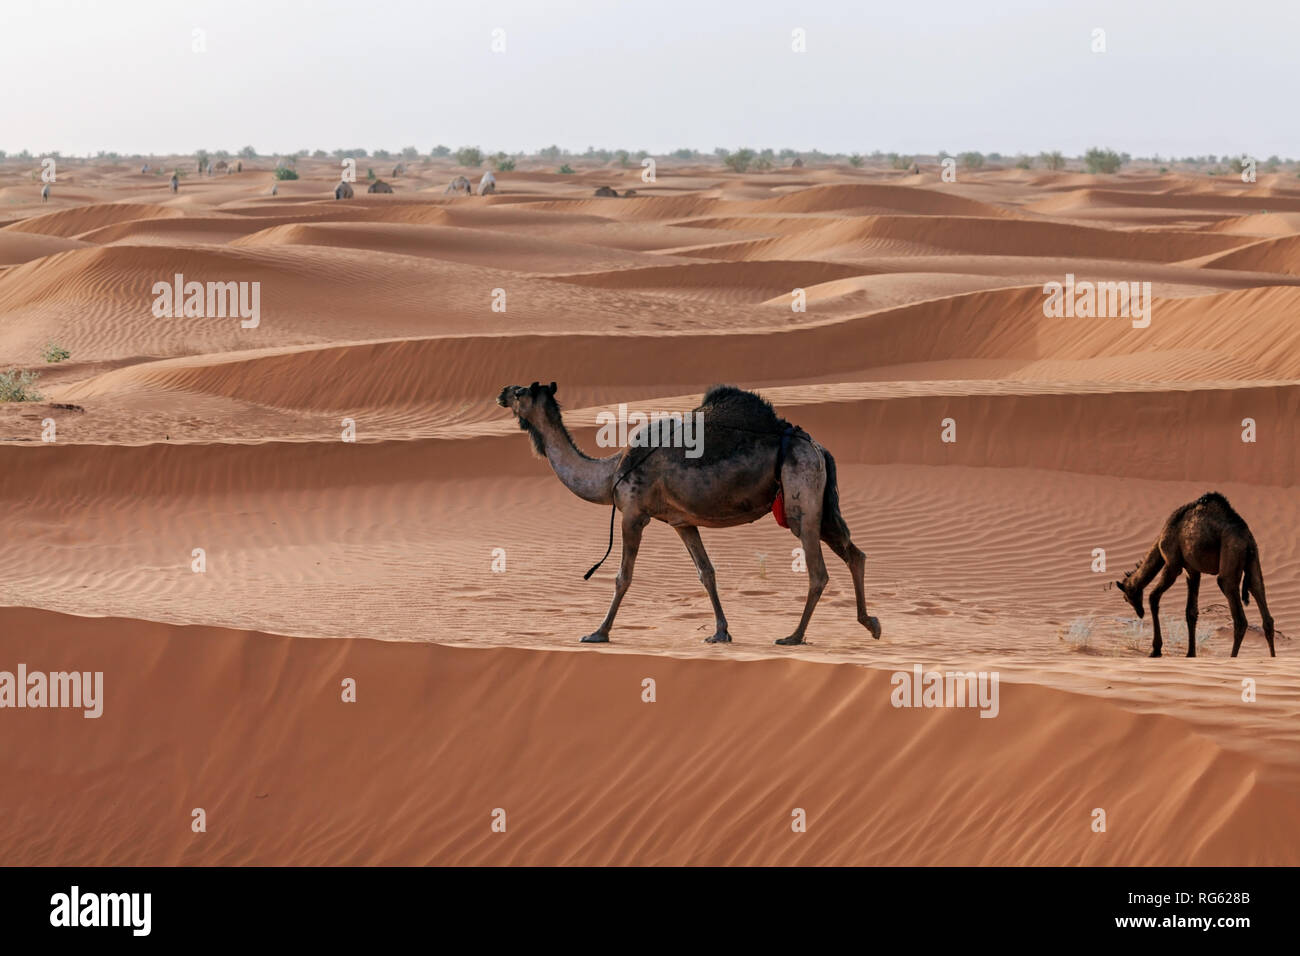 Two camels in the desert, Riyadh, Saudi Arabia Stock Photo